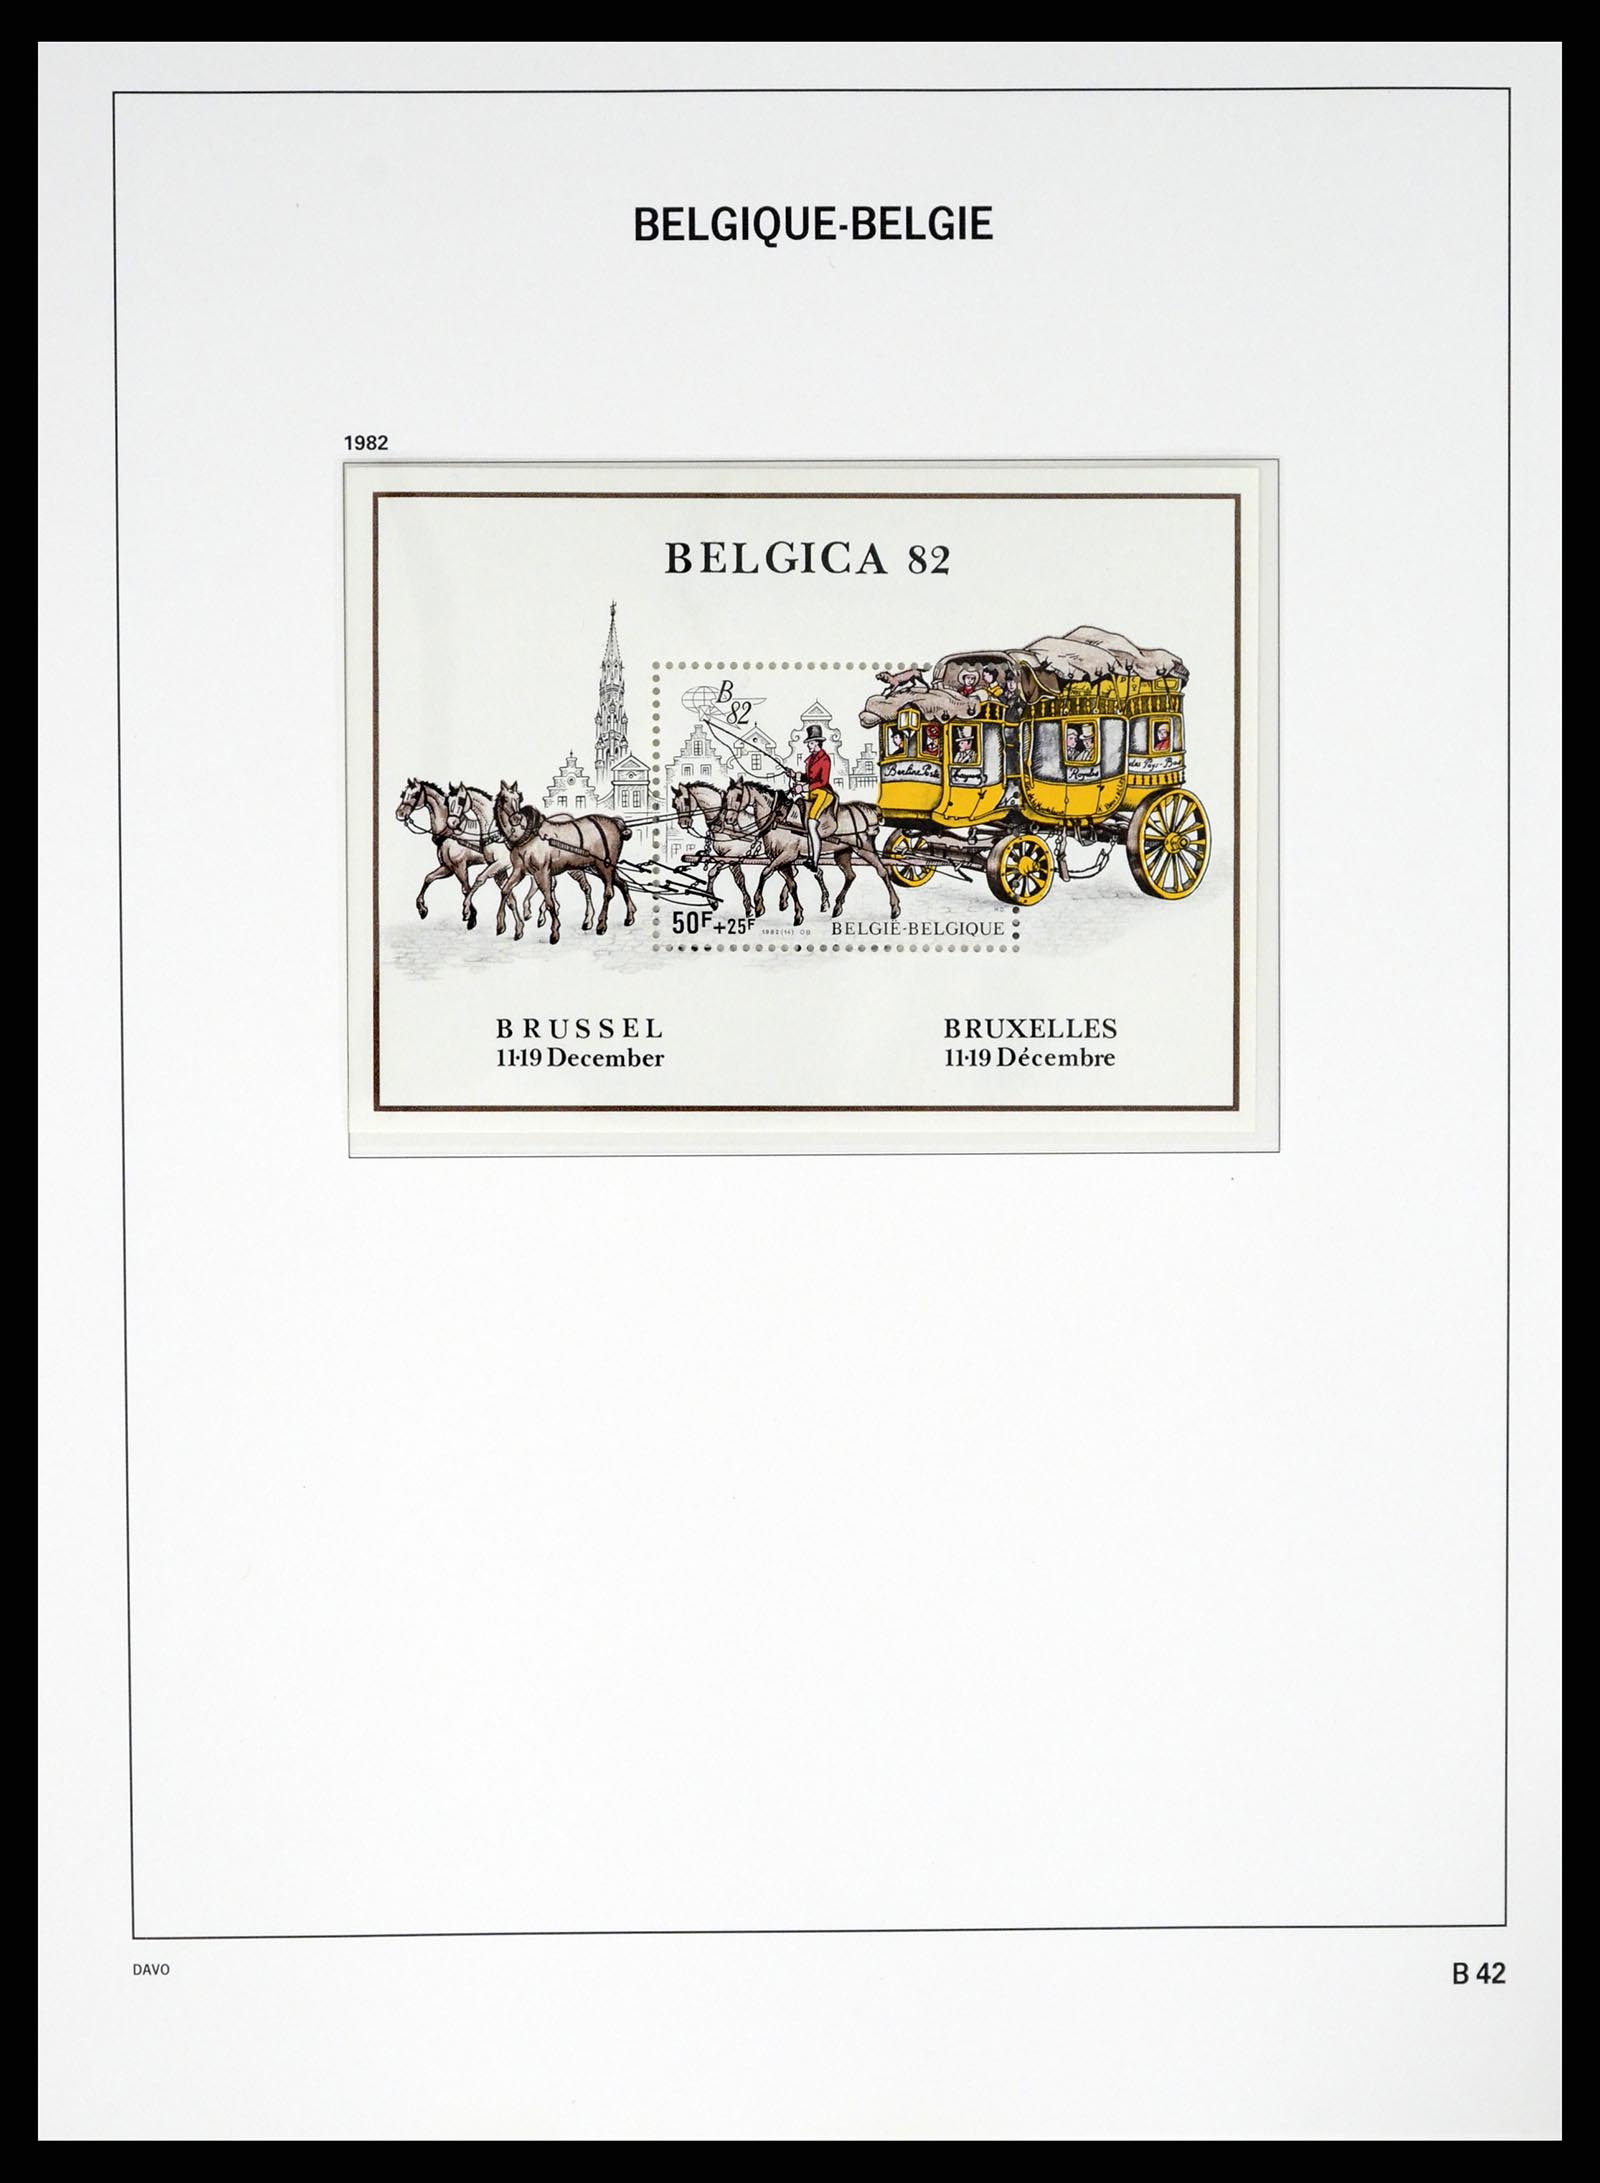 37368 070 - Stamp collection 37368 Belgium 1969-2003.